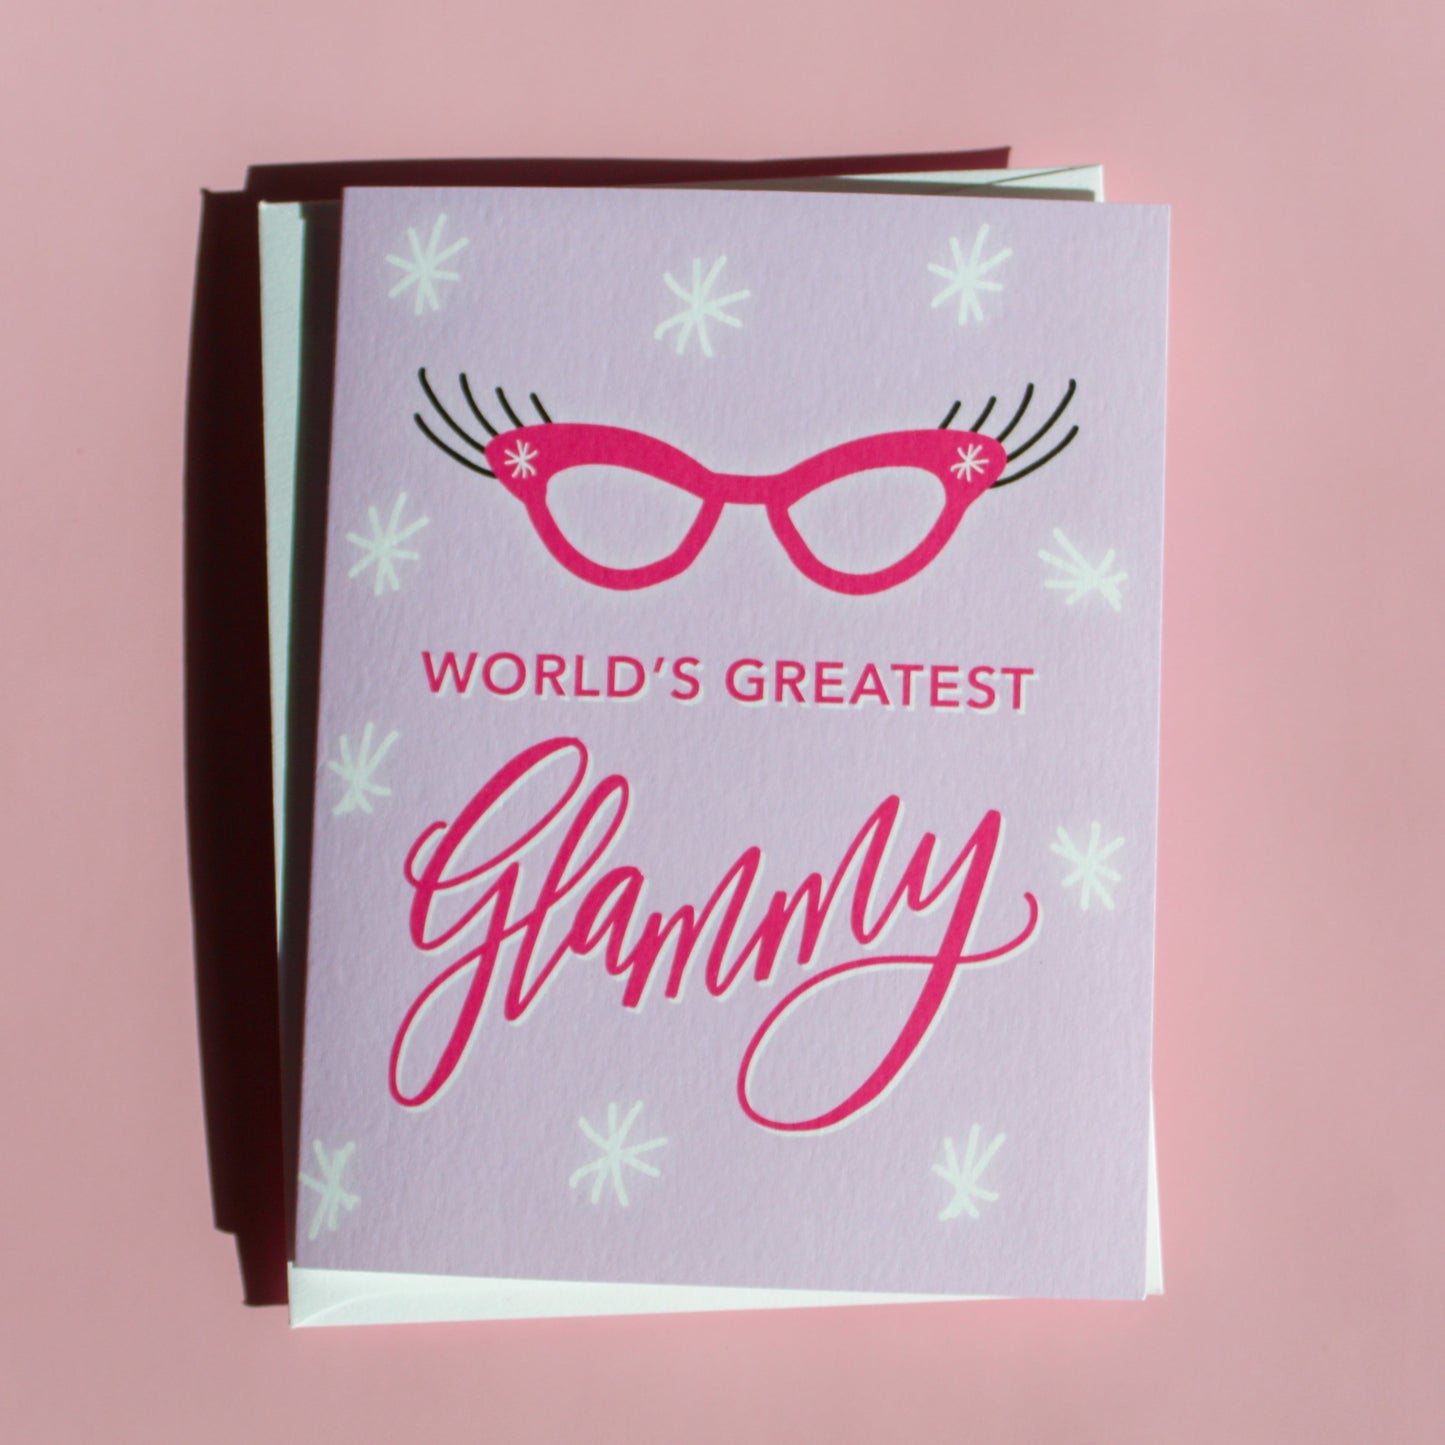 World's Greatest Glammy Greeting Card